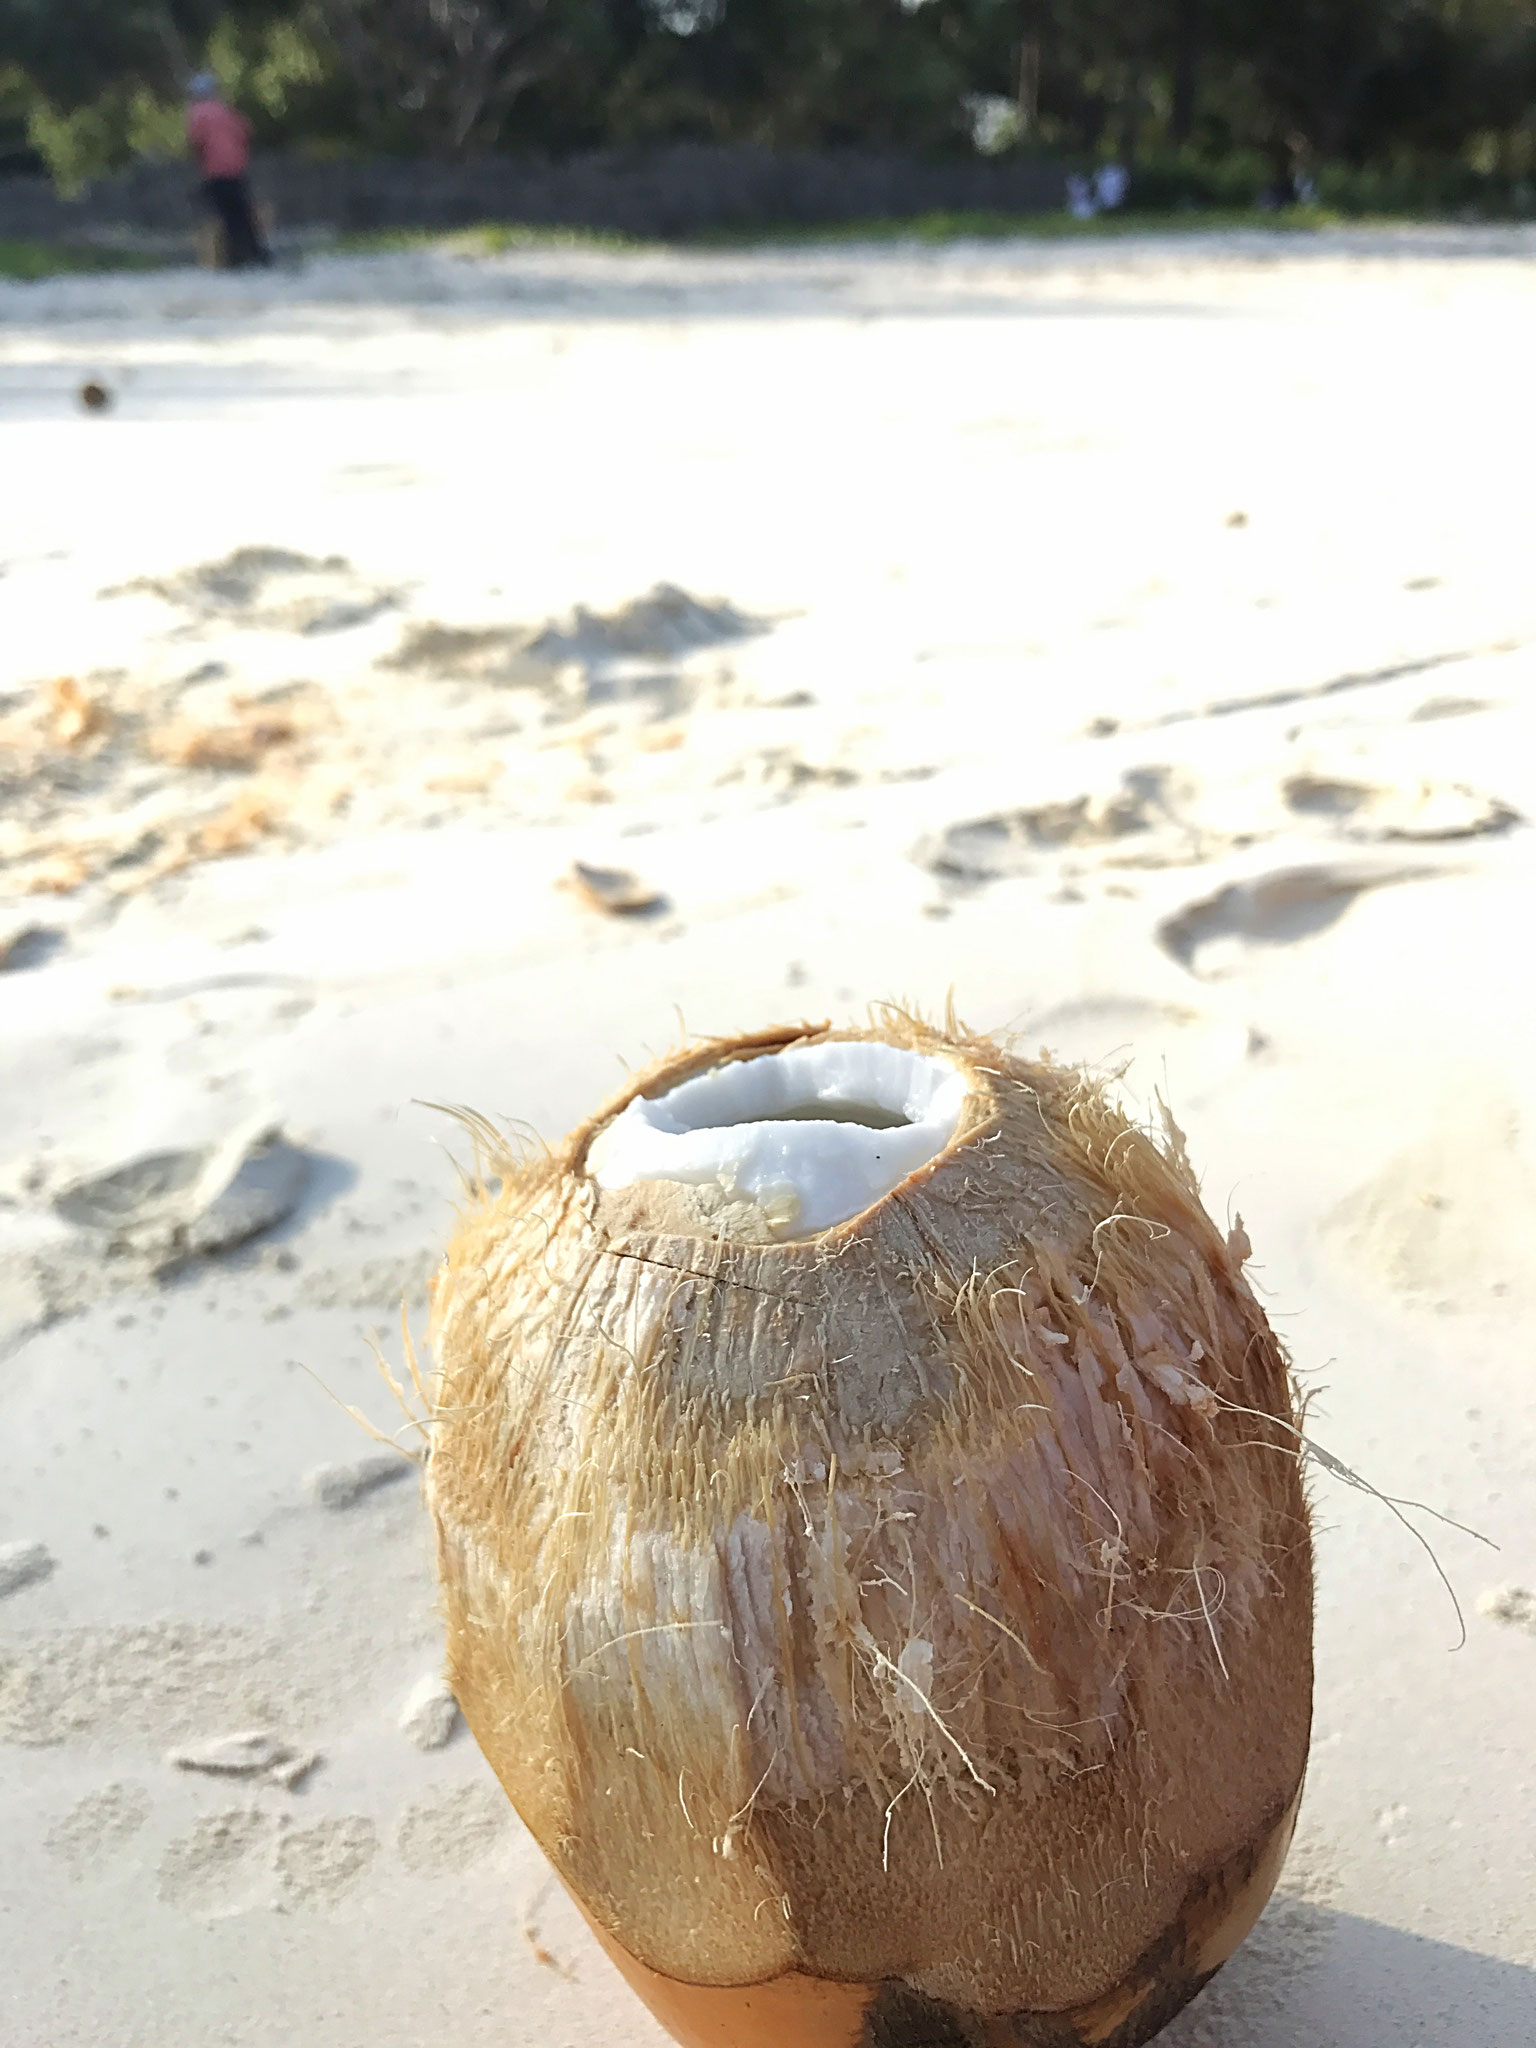 Kokosnuss schlürfen am Diani Strand / Coconut sipping at Diani beach